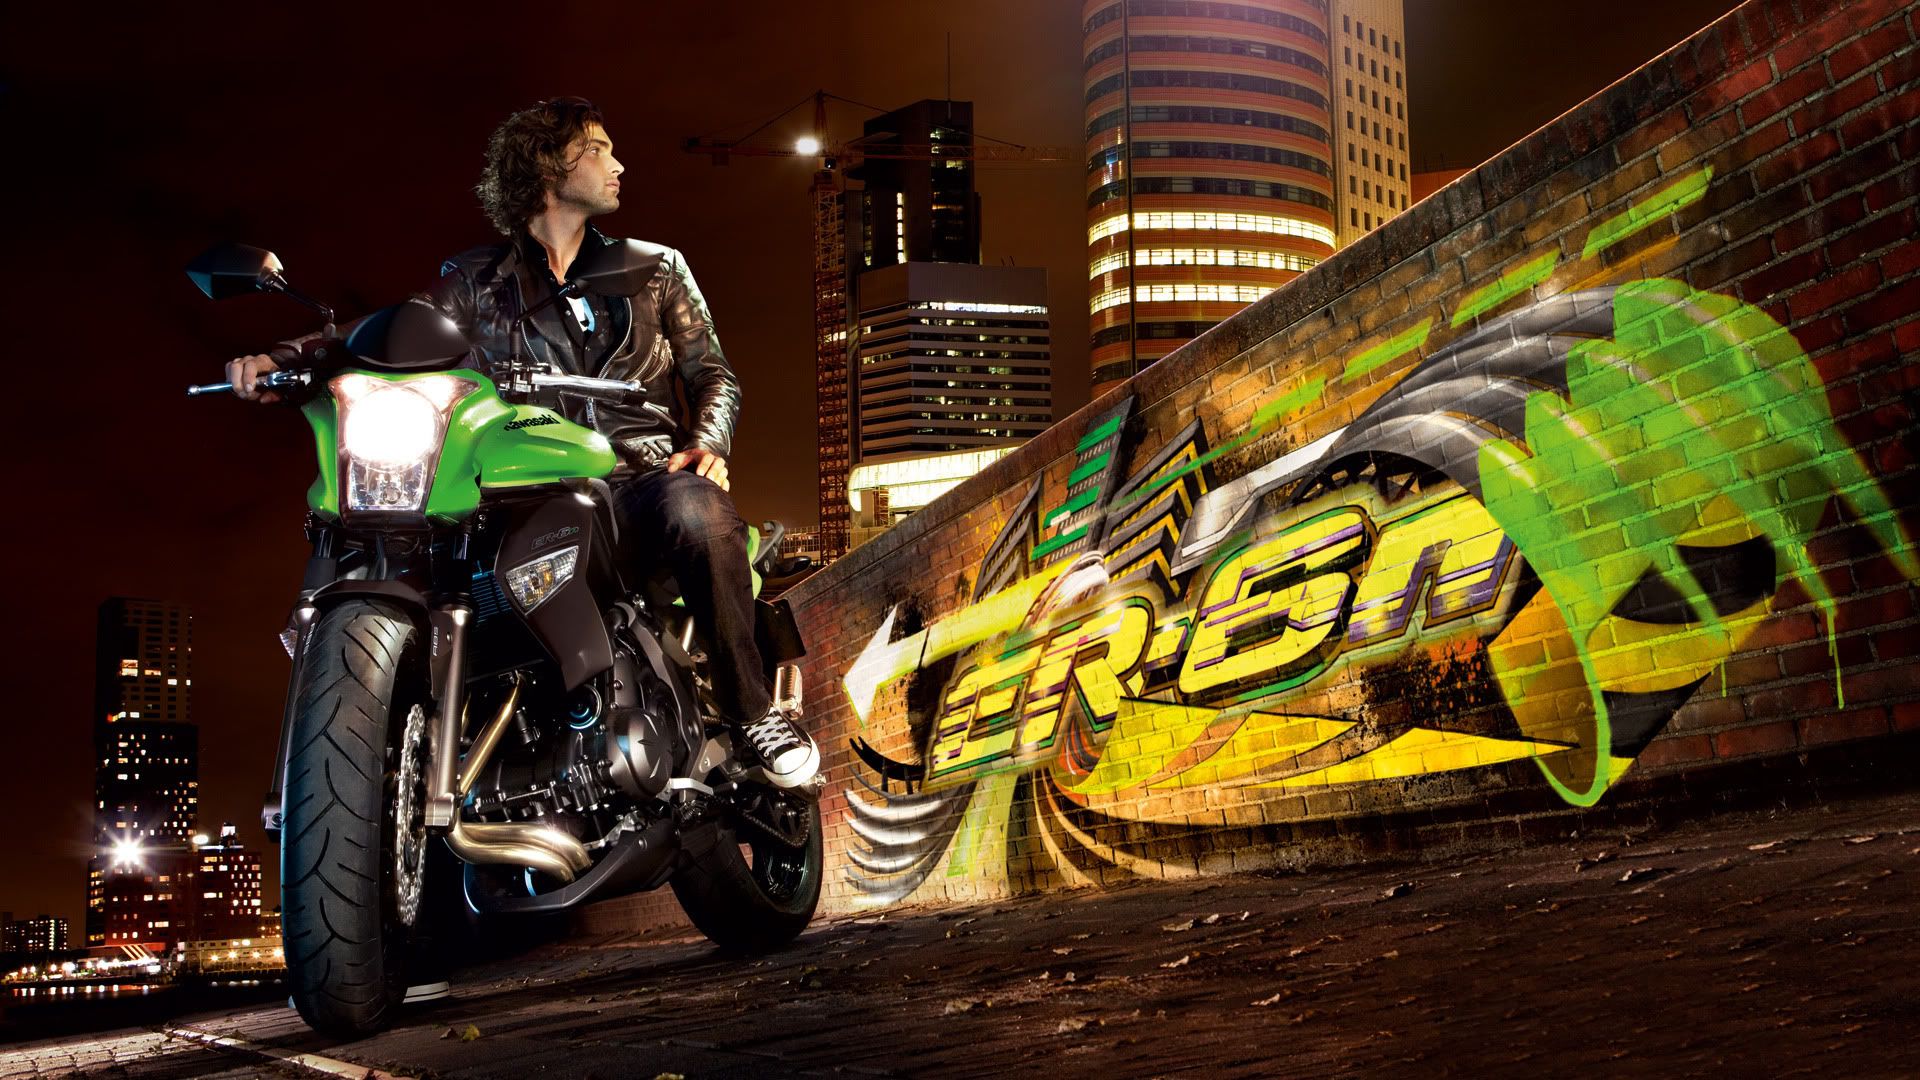 Free Download Kawasaki Motorcycle HD Wallpaper, HQ Backgrounds ...